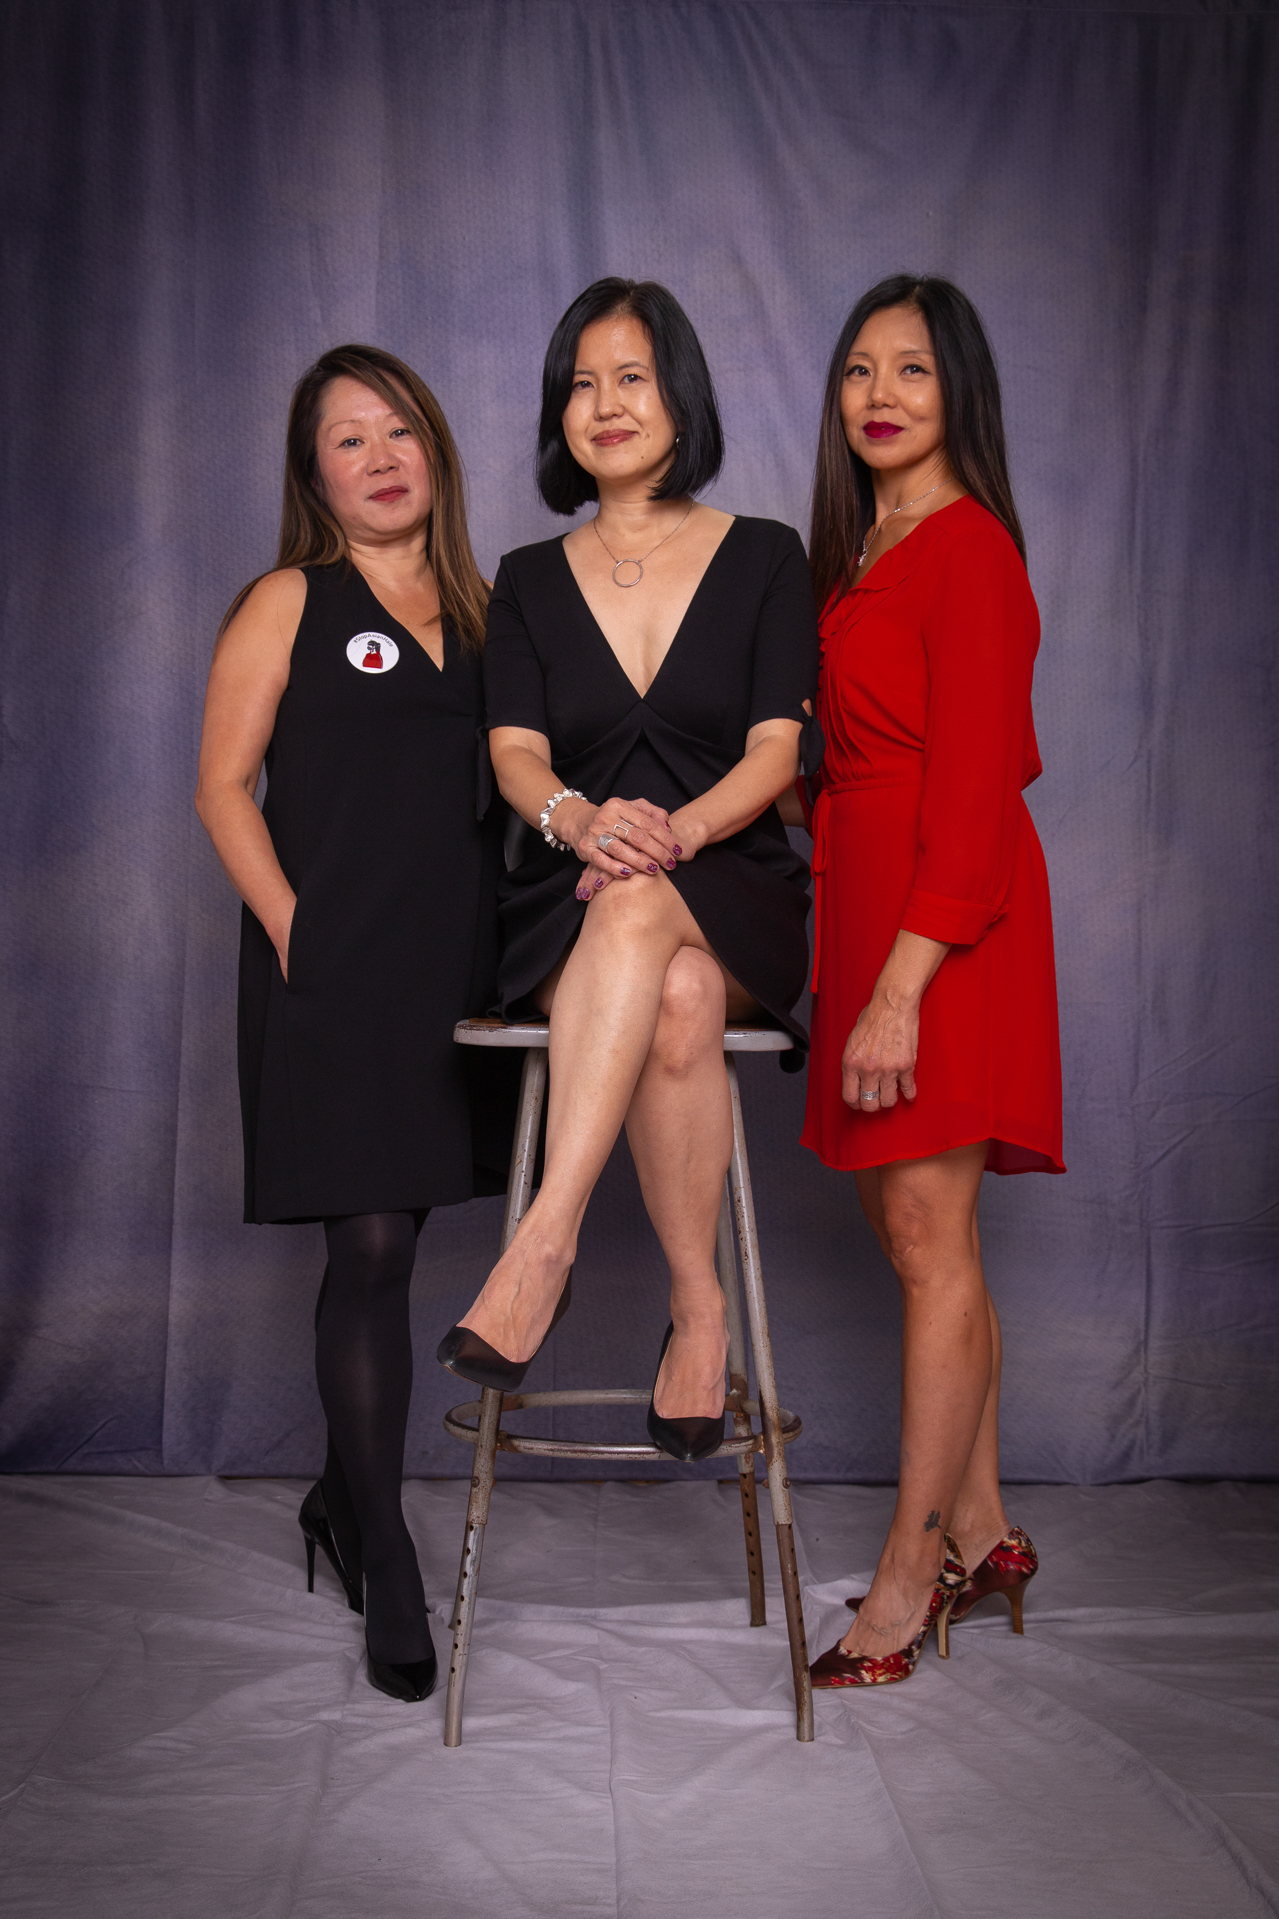 Three woman